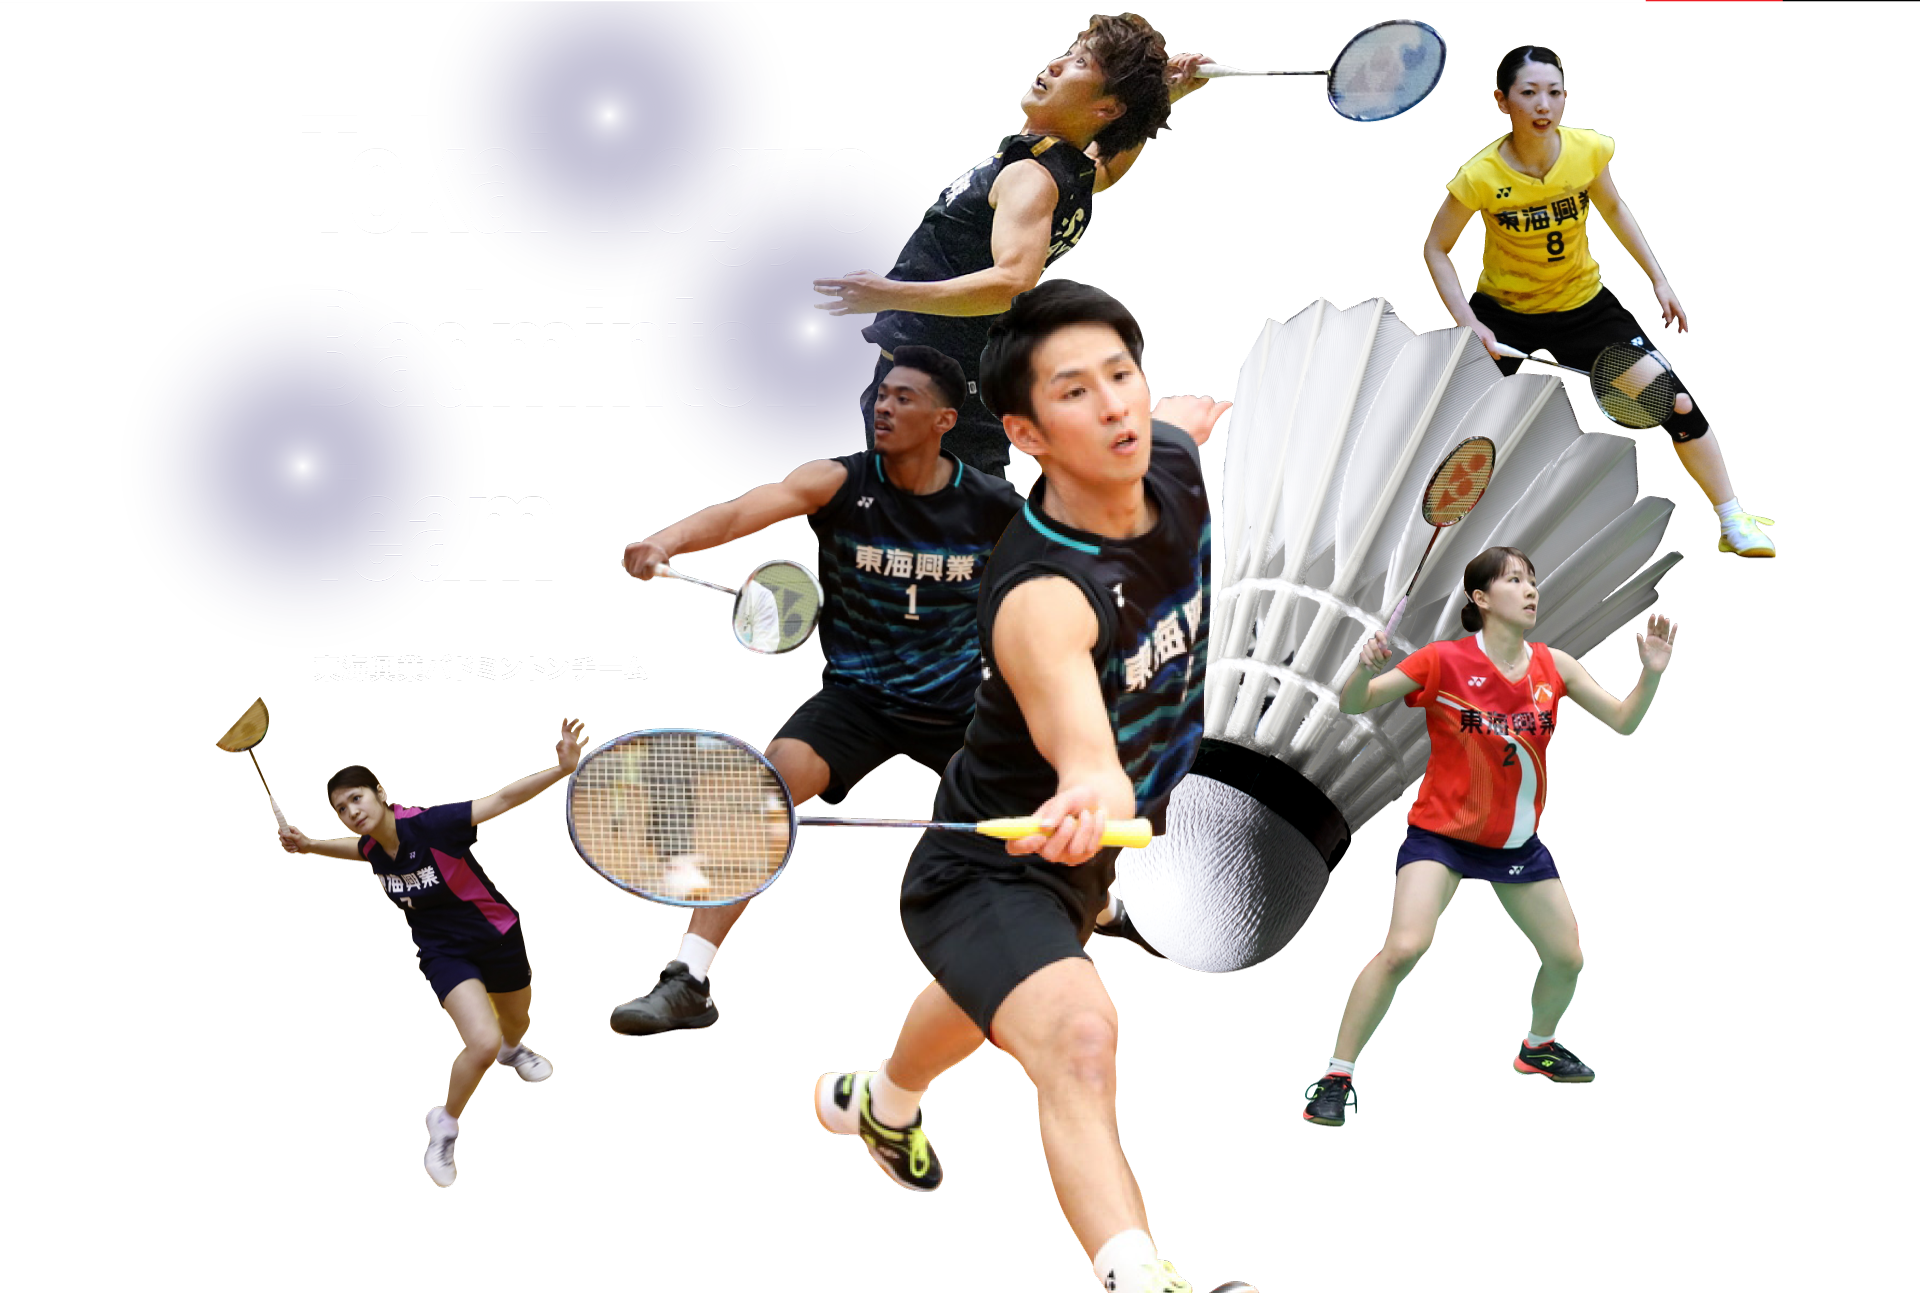 Tokai kogyo Badminton Team 東海興業バドミントンチーム